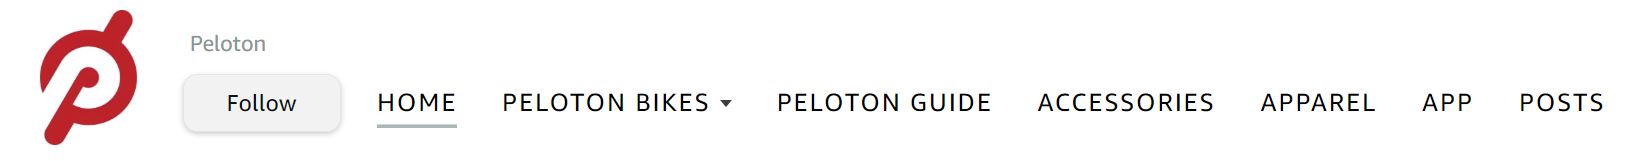 Peloton Amazon Store navigation